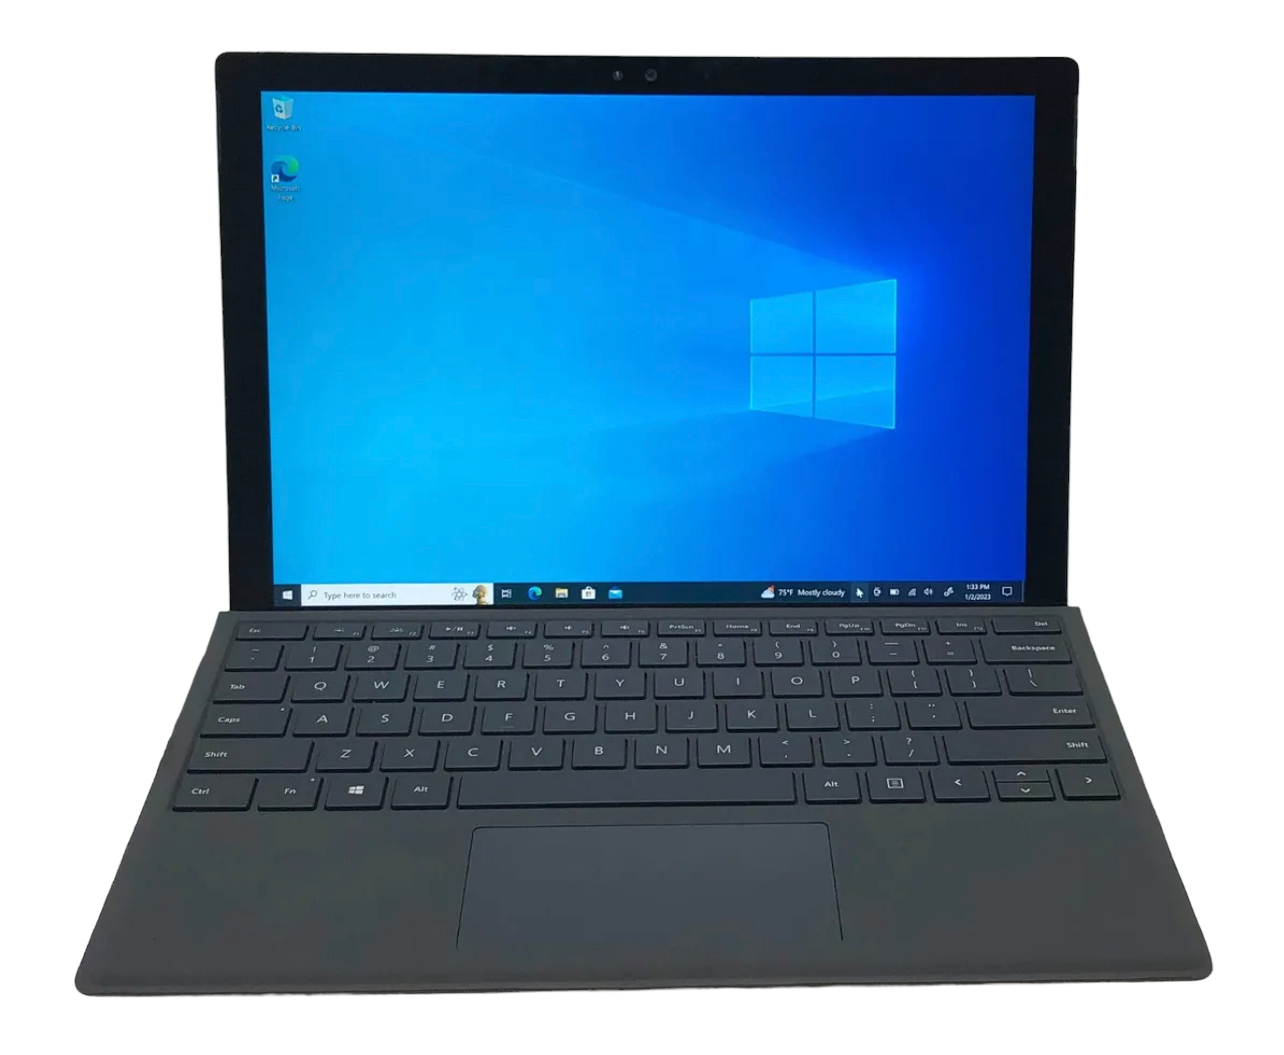 Microsoft Surface Pro 4 (Intel Core M3 0.90GHz, 4GB, 128GB SSD) Windows 10 A/B Condition